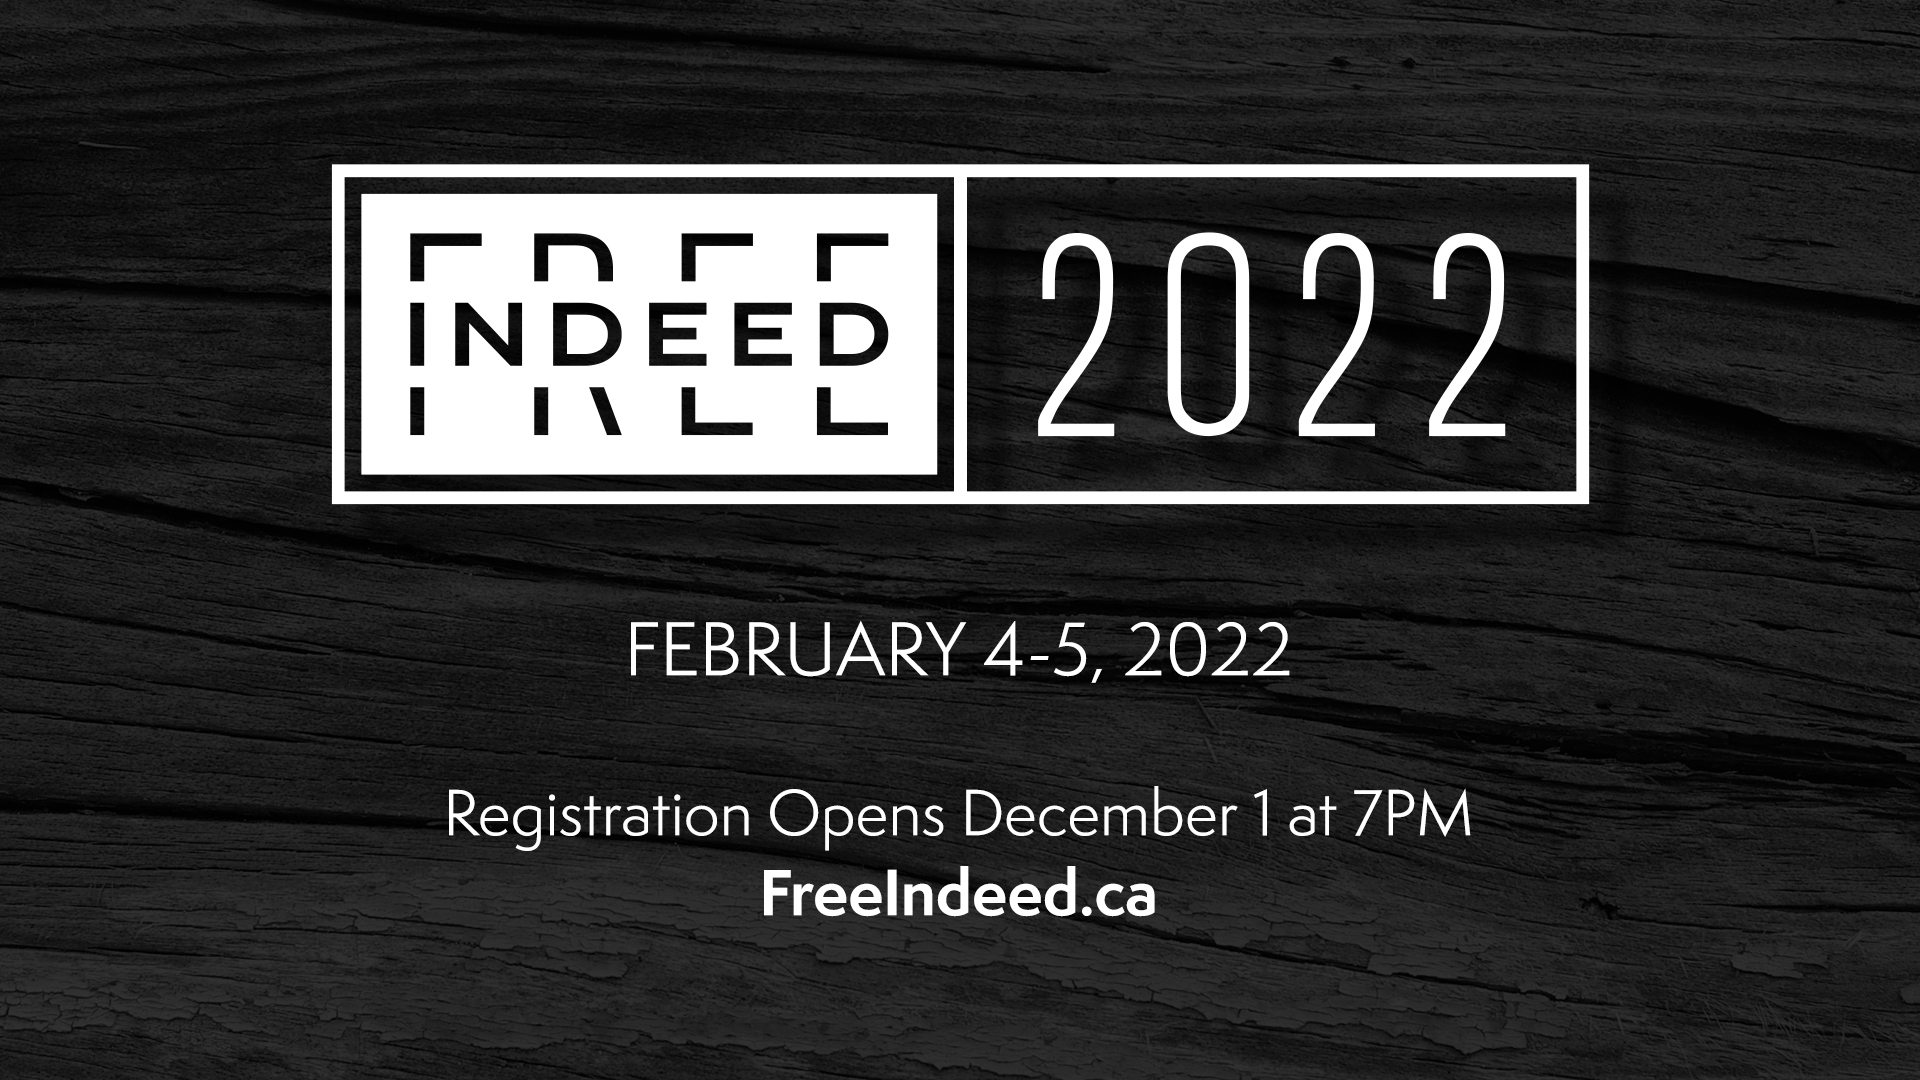 Free Indeed Registration 2022